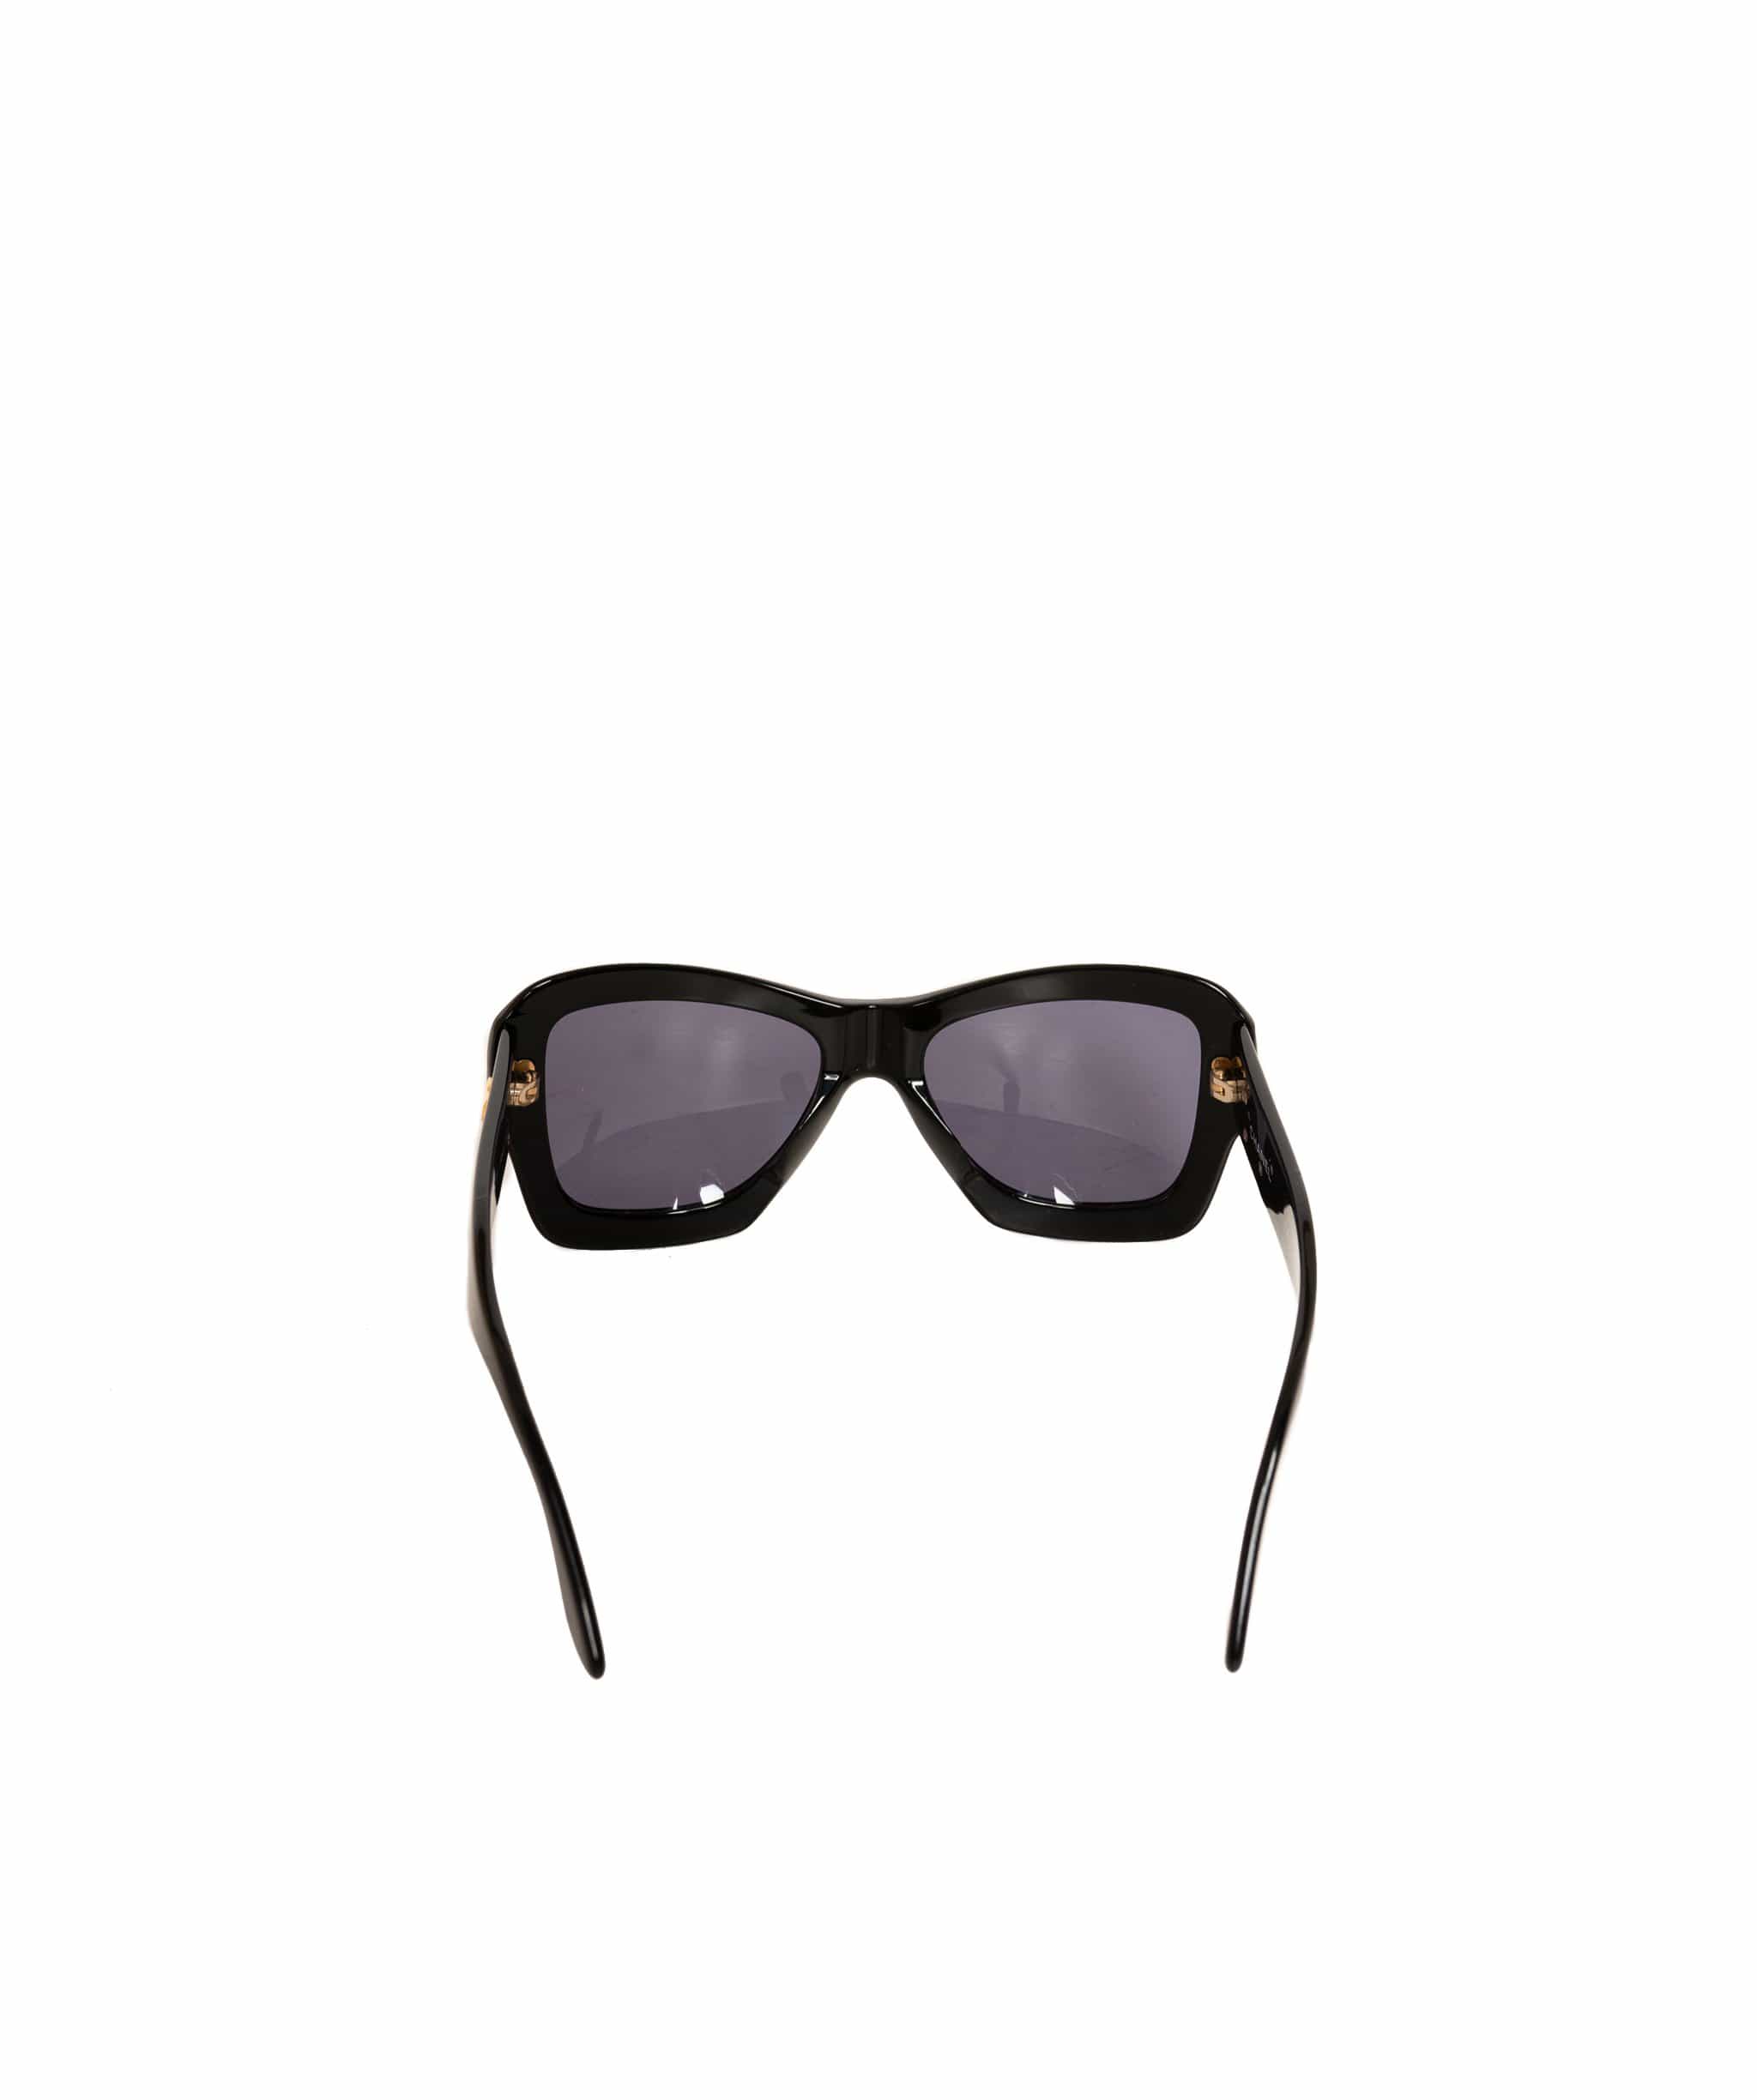 Chanel Chanel vintage Black frame sunglasses - AWL1166